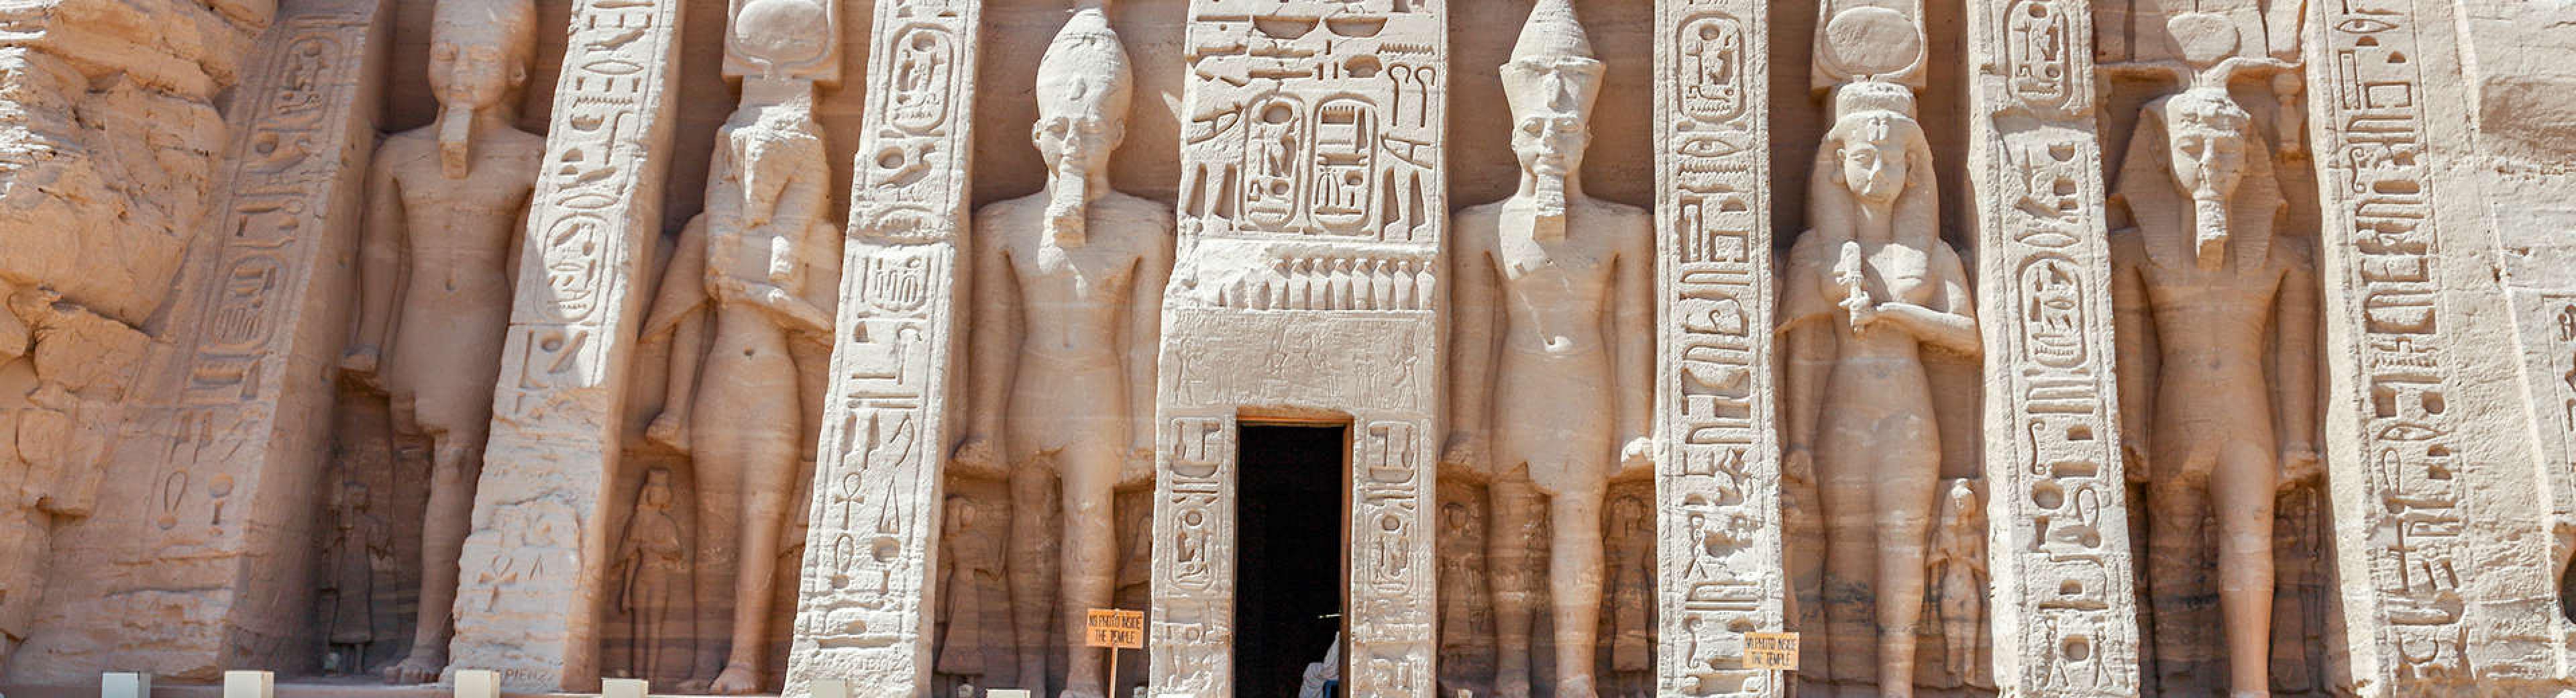 egypt abu simbel cairo